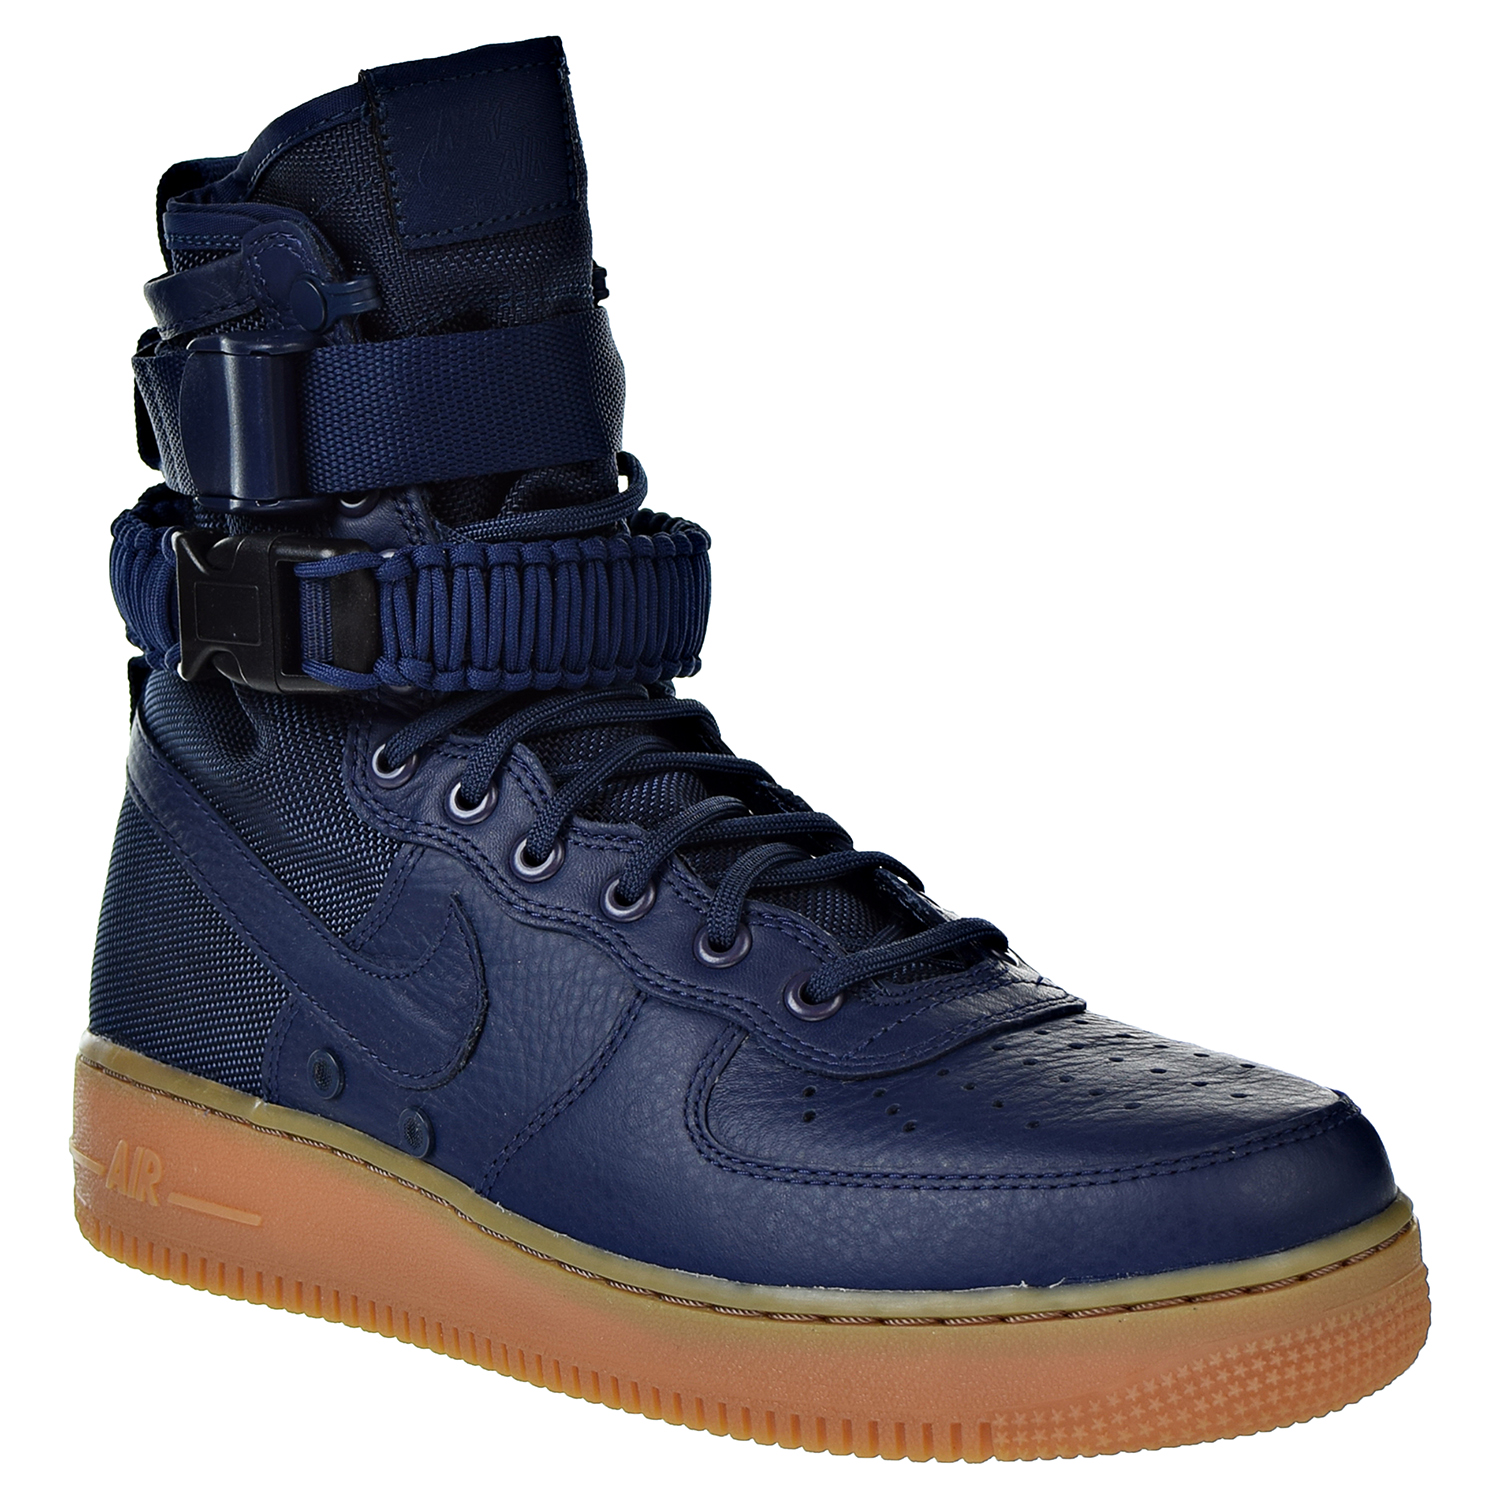 Nike SF Air Force 1 Men's Boots Midnight NavyMidnight Navy 864024400